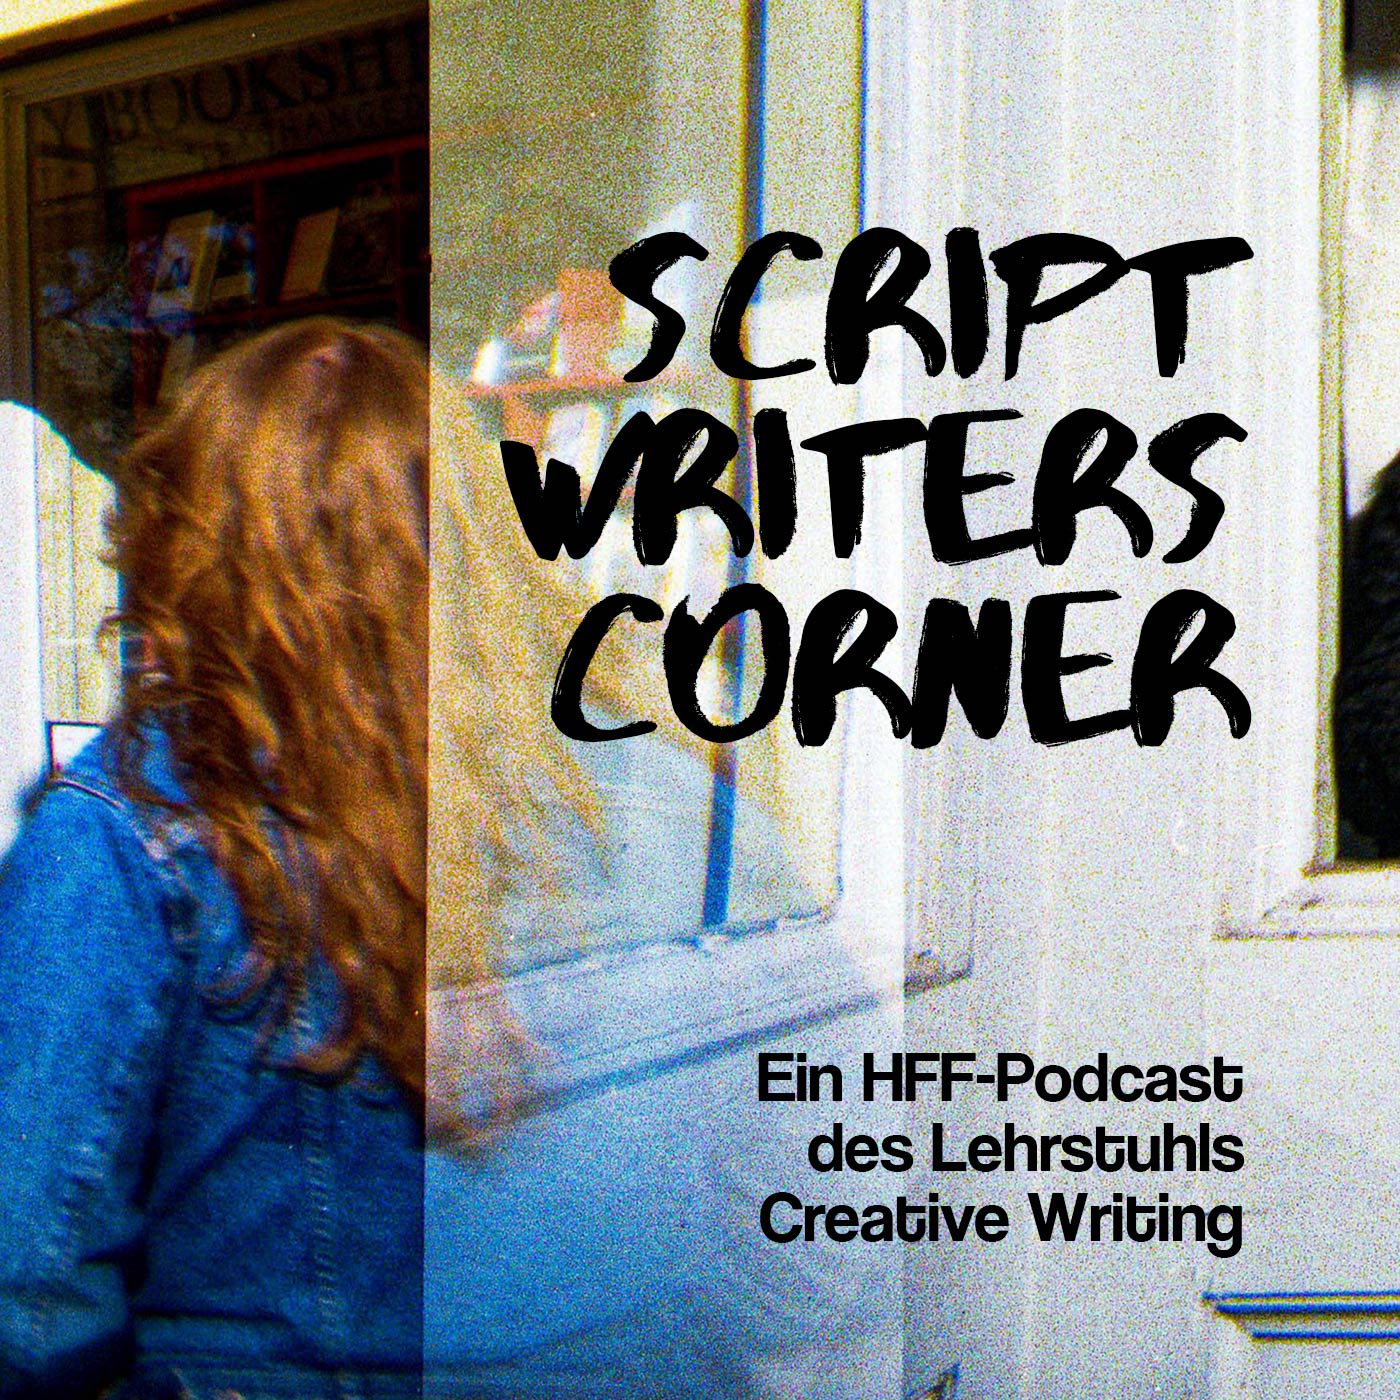 Scriptwriters Corner